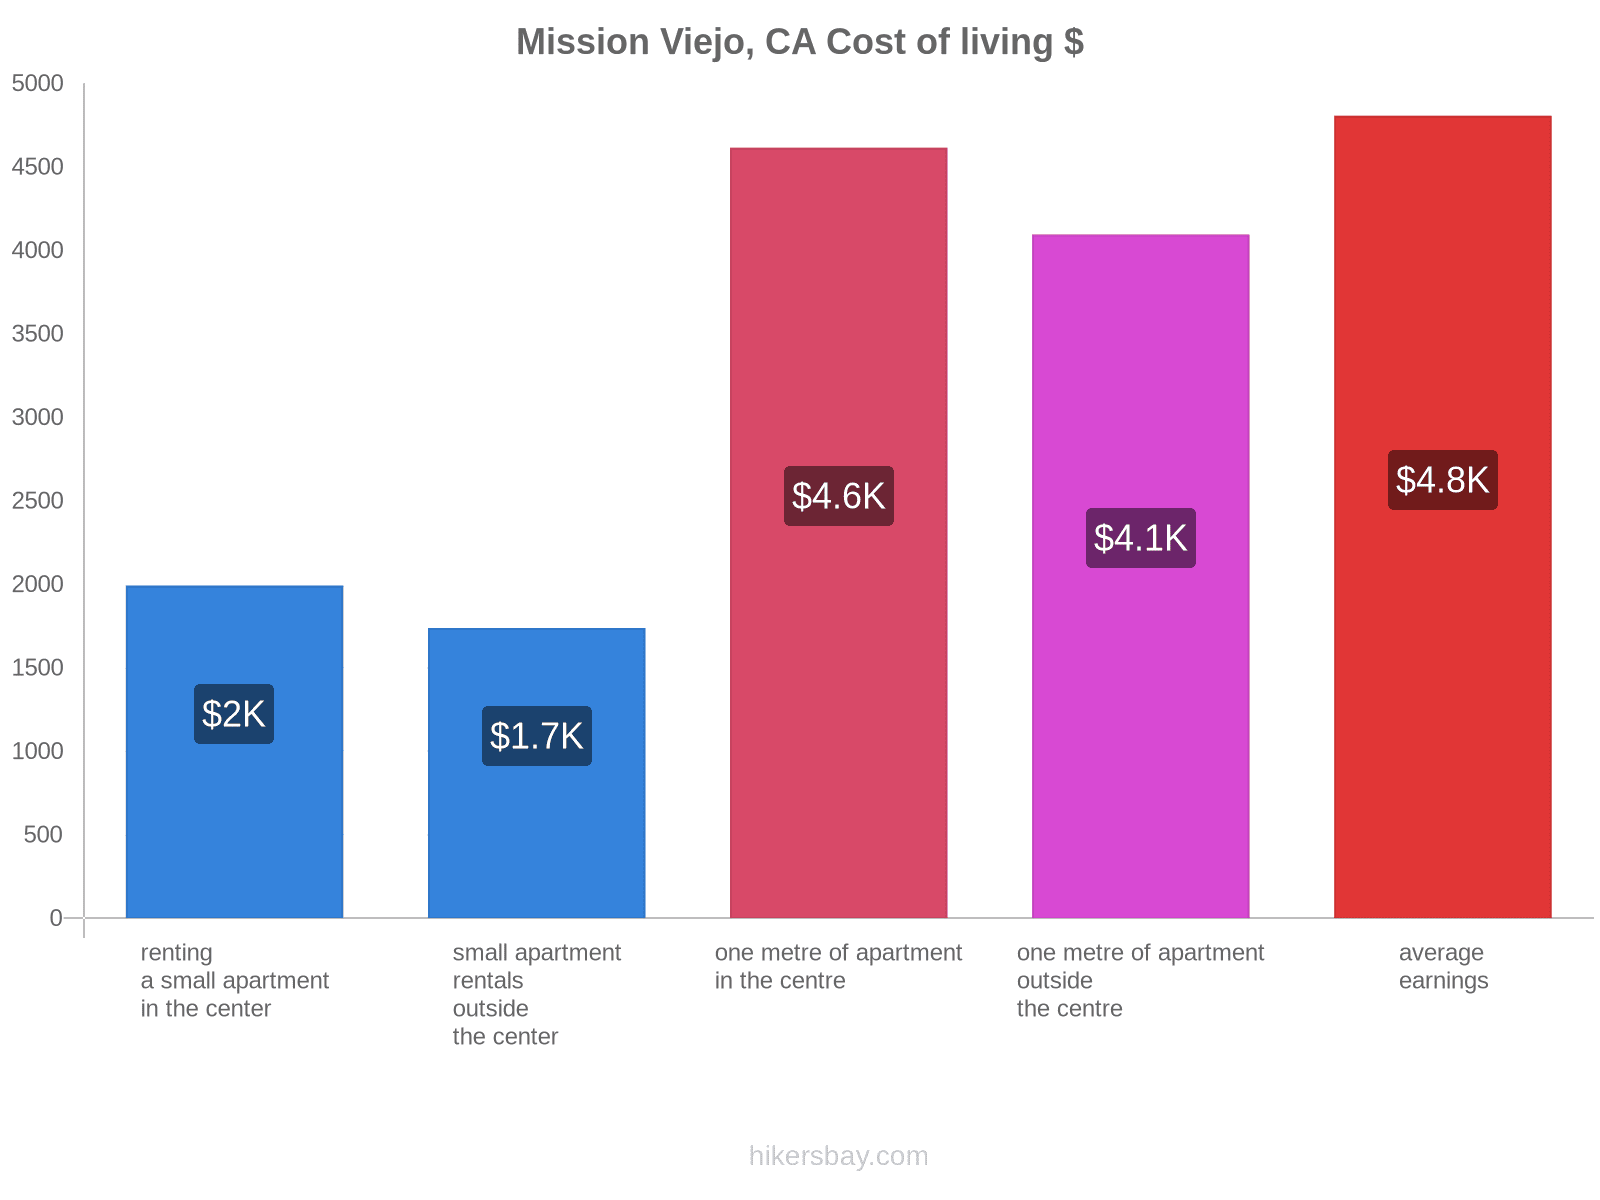 Mission Viejo, CA cost of living hikersbay.com